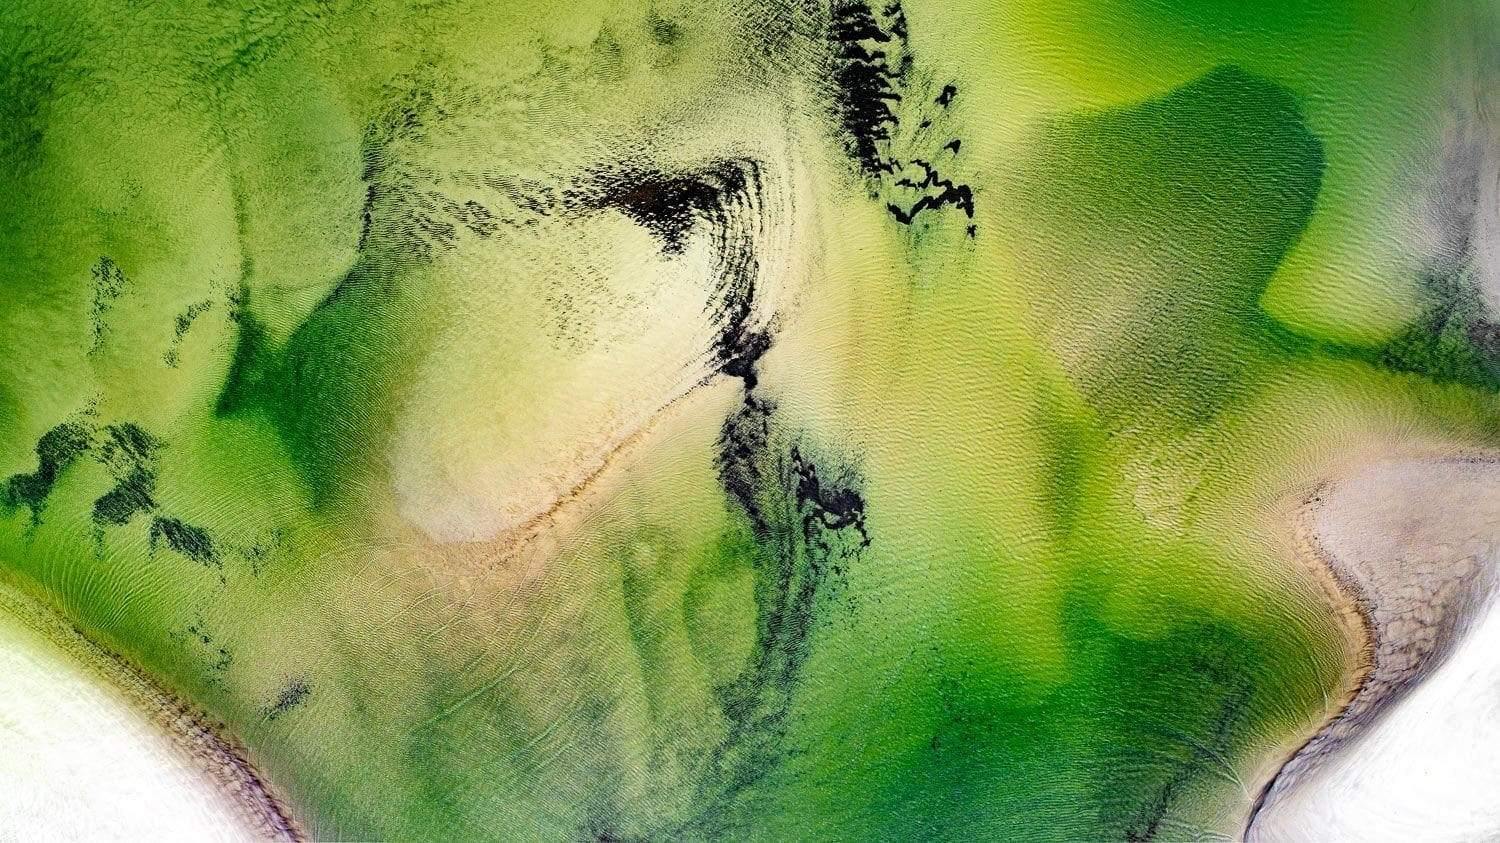 Emerald Waters-Tom-Putt-Landscape-Prints